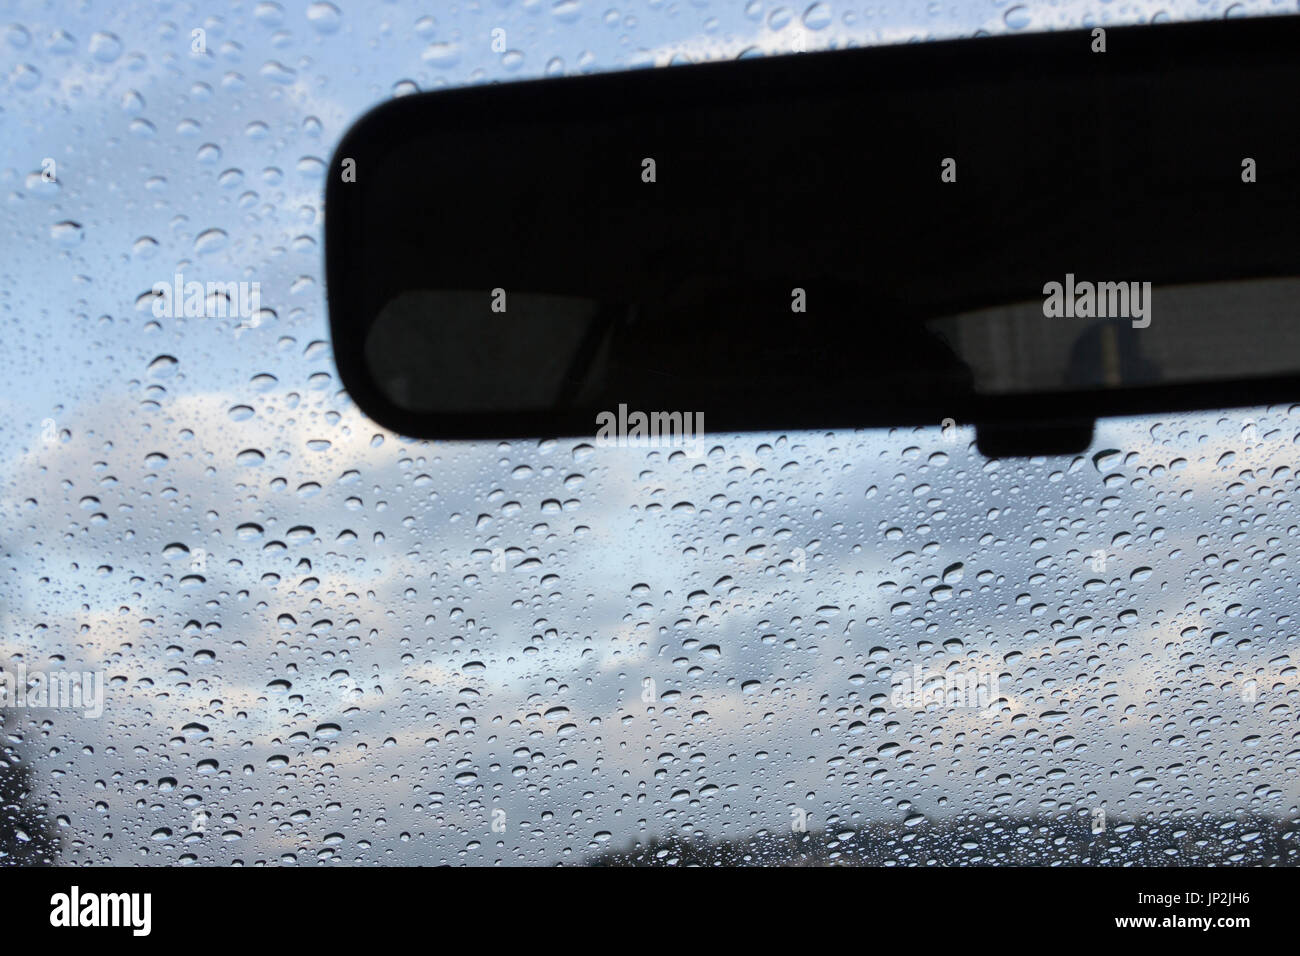 https://c8.alamy.com/comp/JP2JH6/rain-drops-on-car-windshield-JP2JH6.jpg